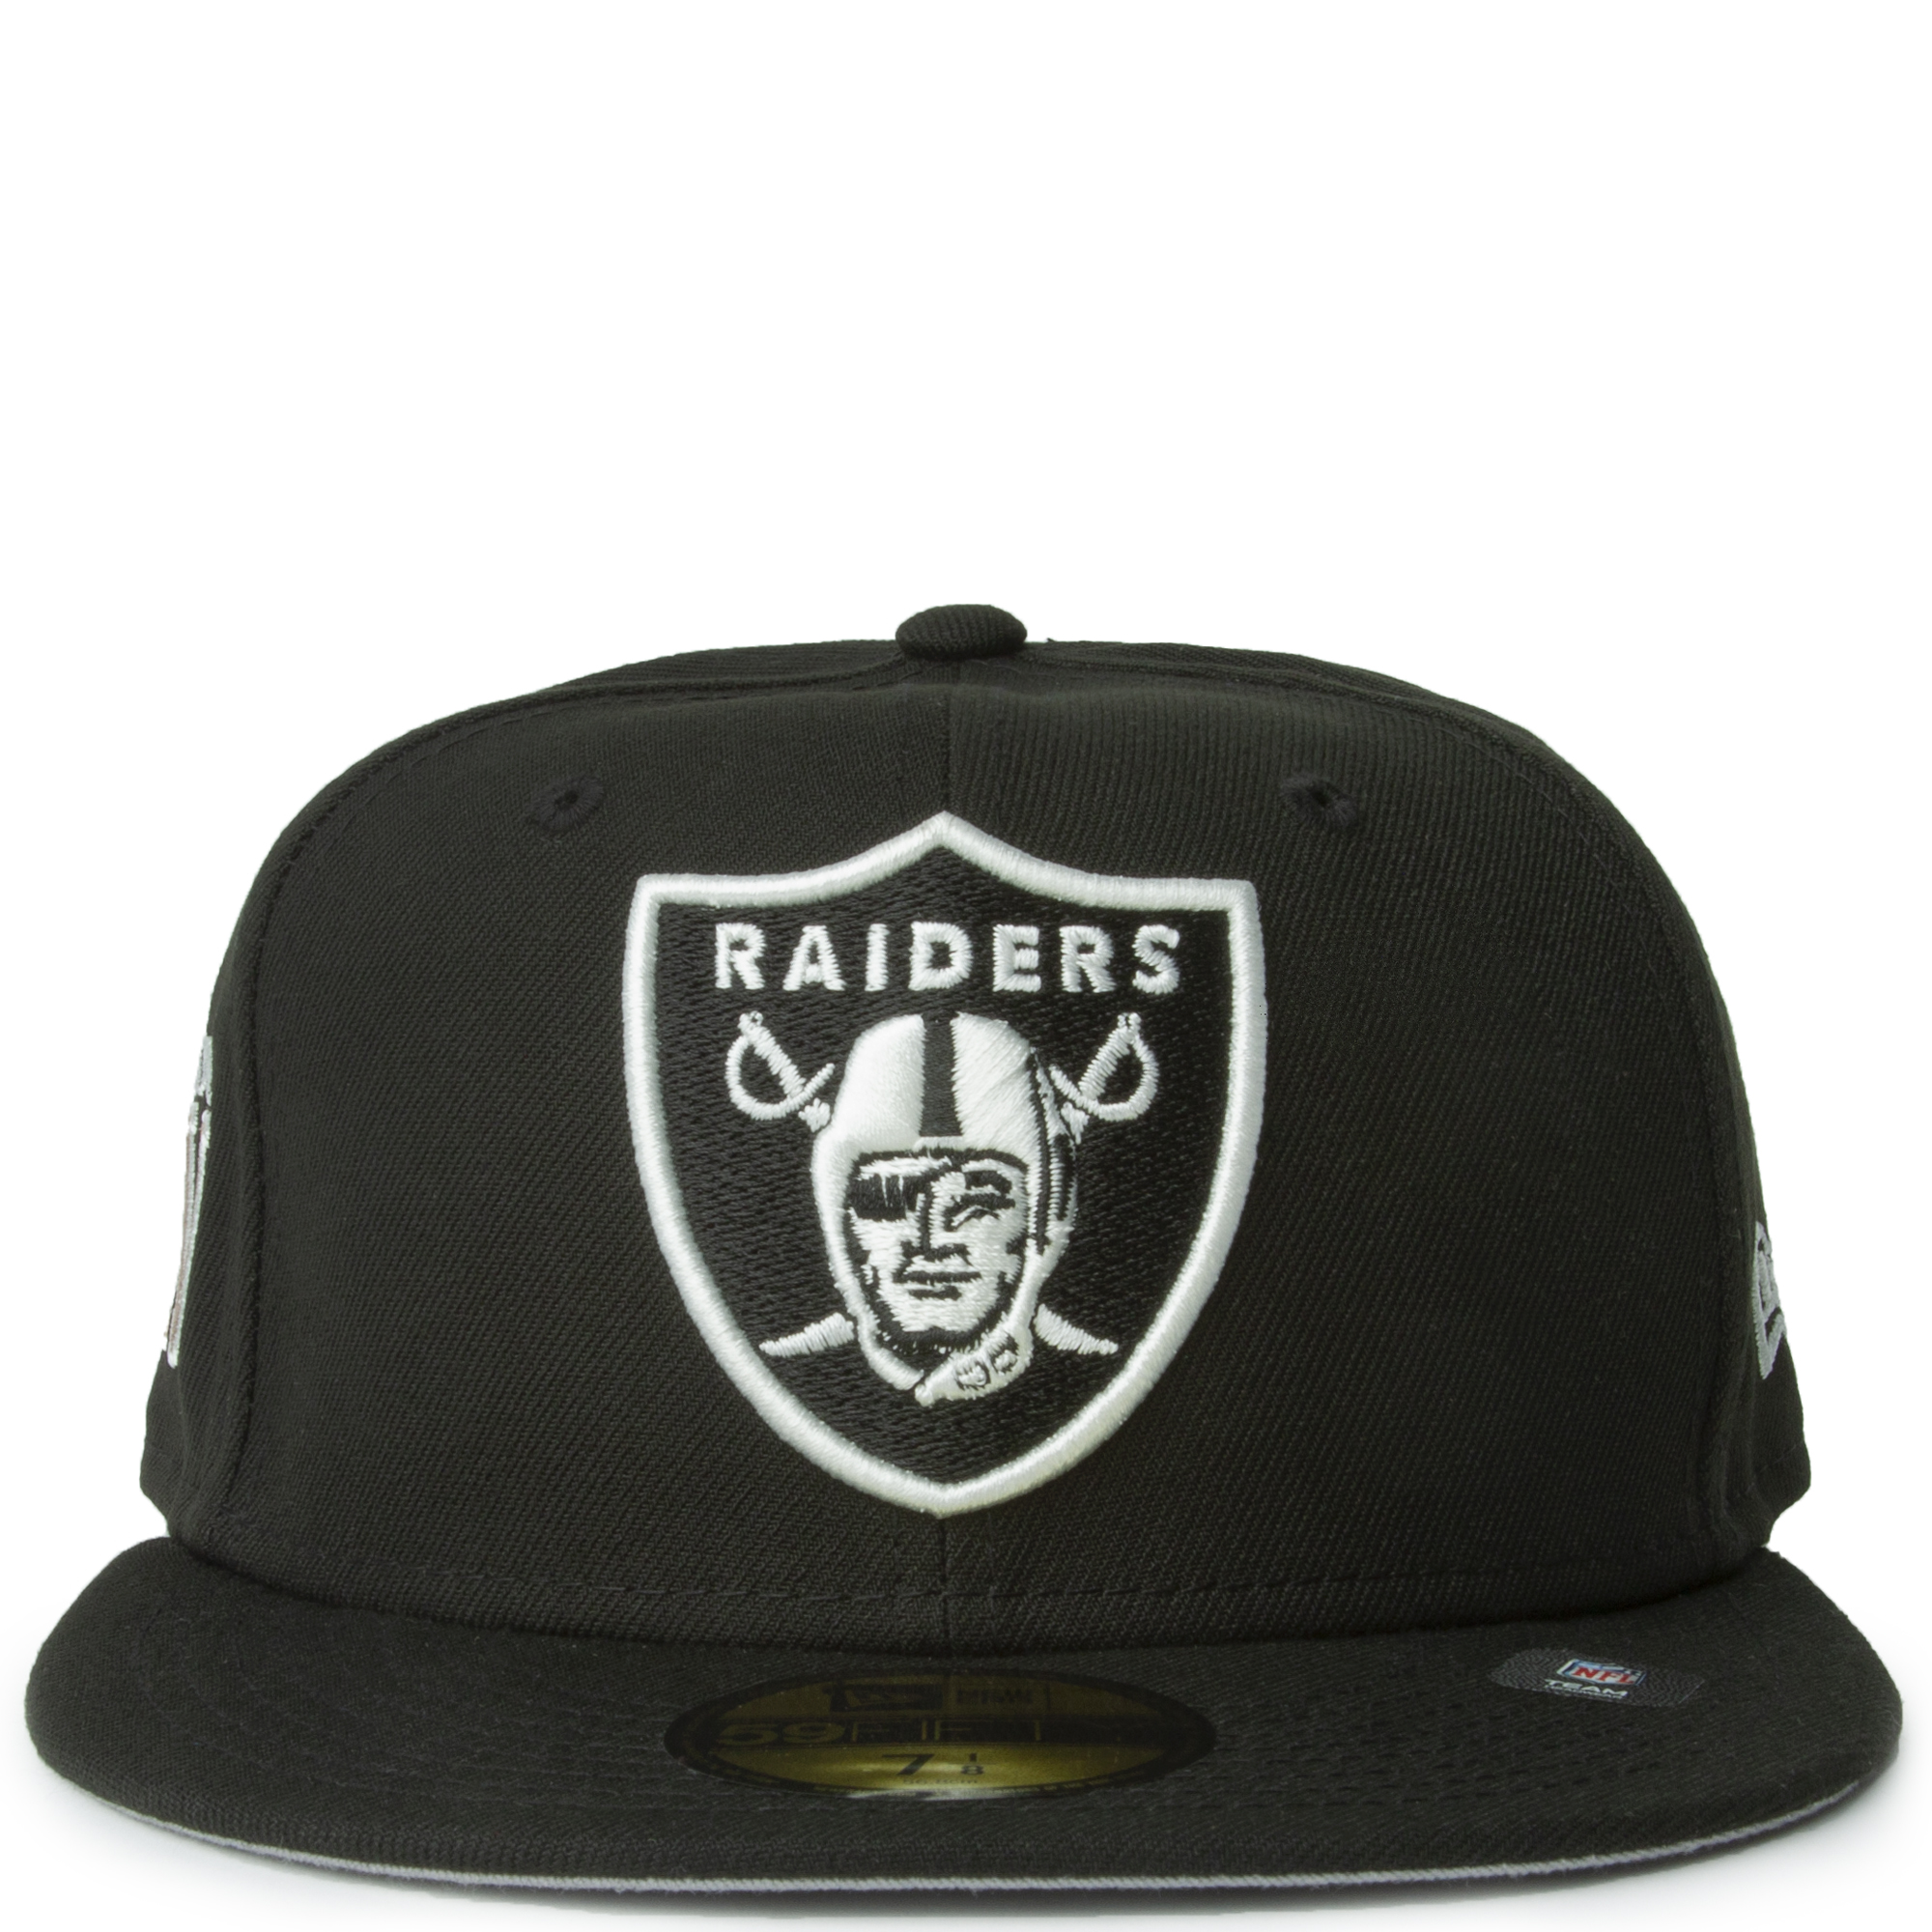 Las Vegas Raiders Fitted New Era 59FIFTY Super Bowl Champions World Class Cap Hat Cream Black